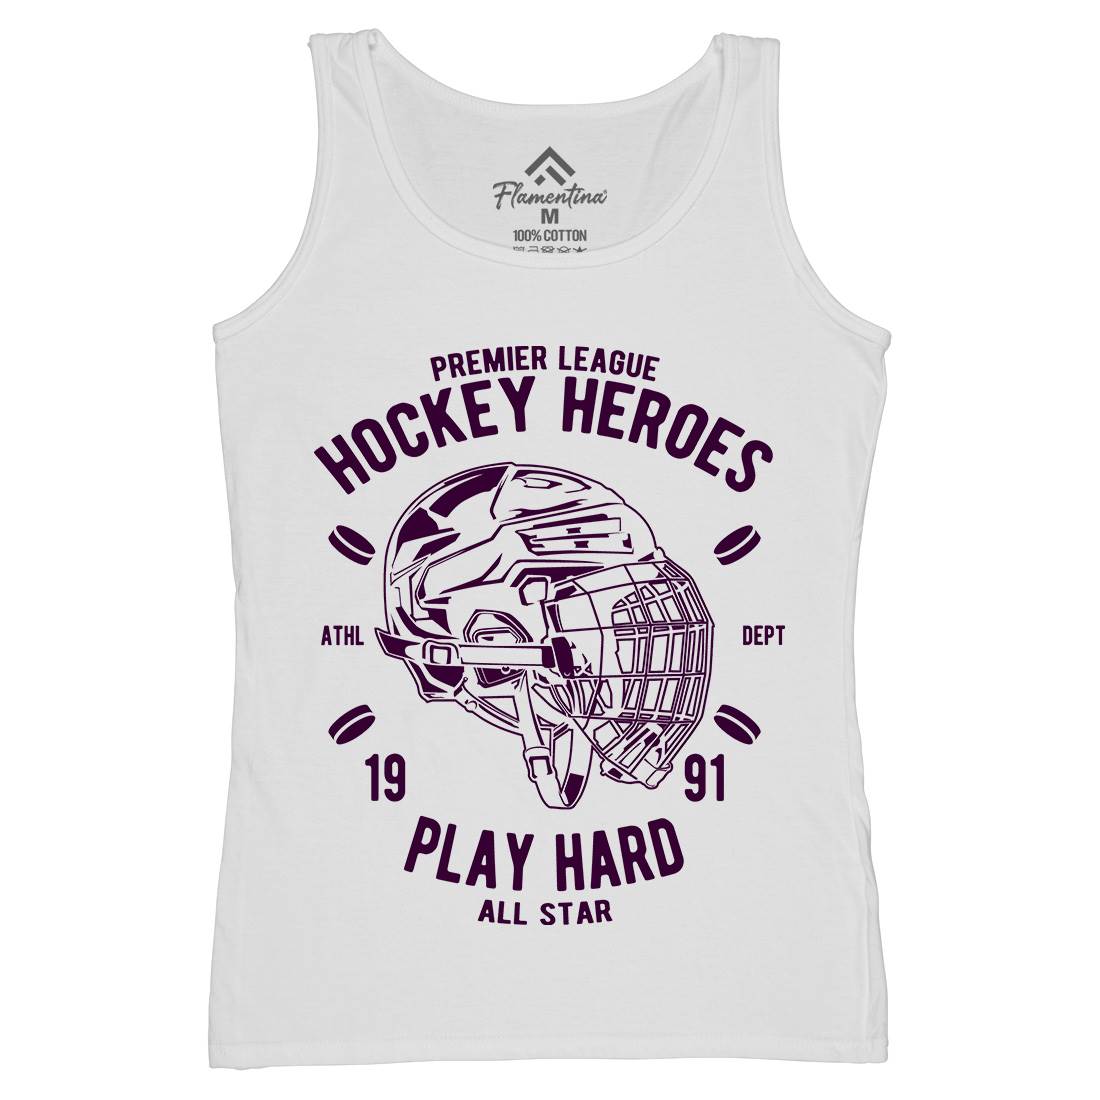 Hockey Heroes Womens Organic Tank Top Vest Sport A064